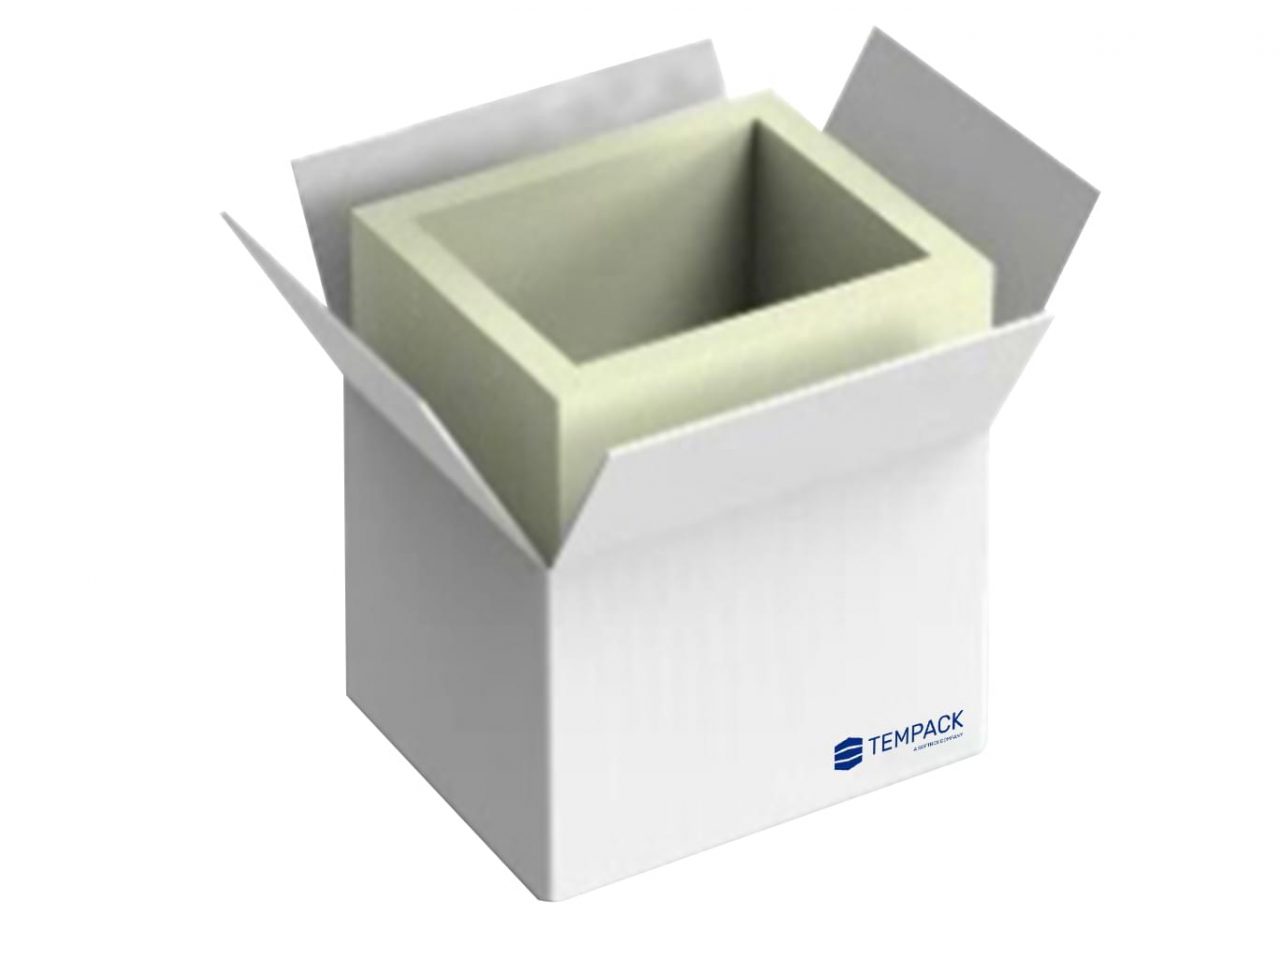 tempack-cipu-single-use-packaging-1@2x-1280x958